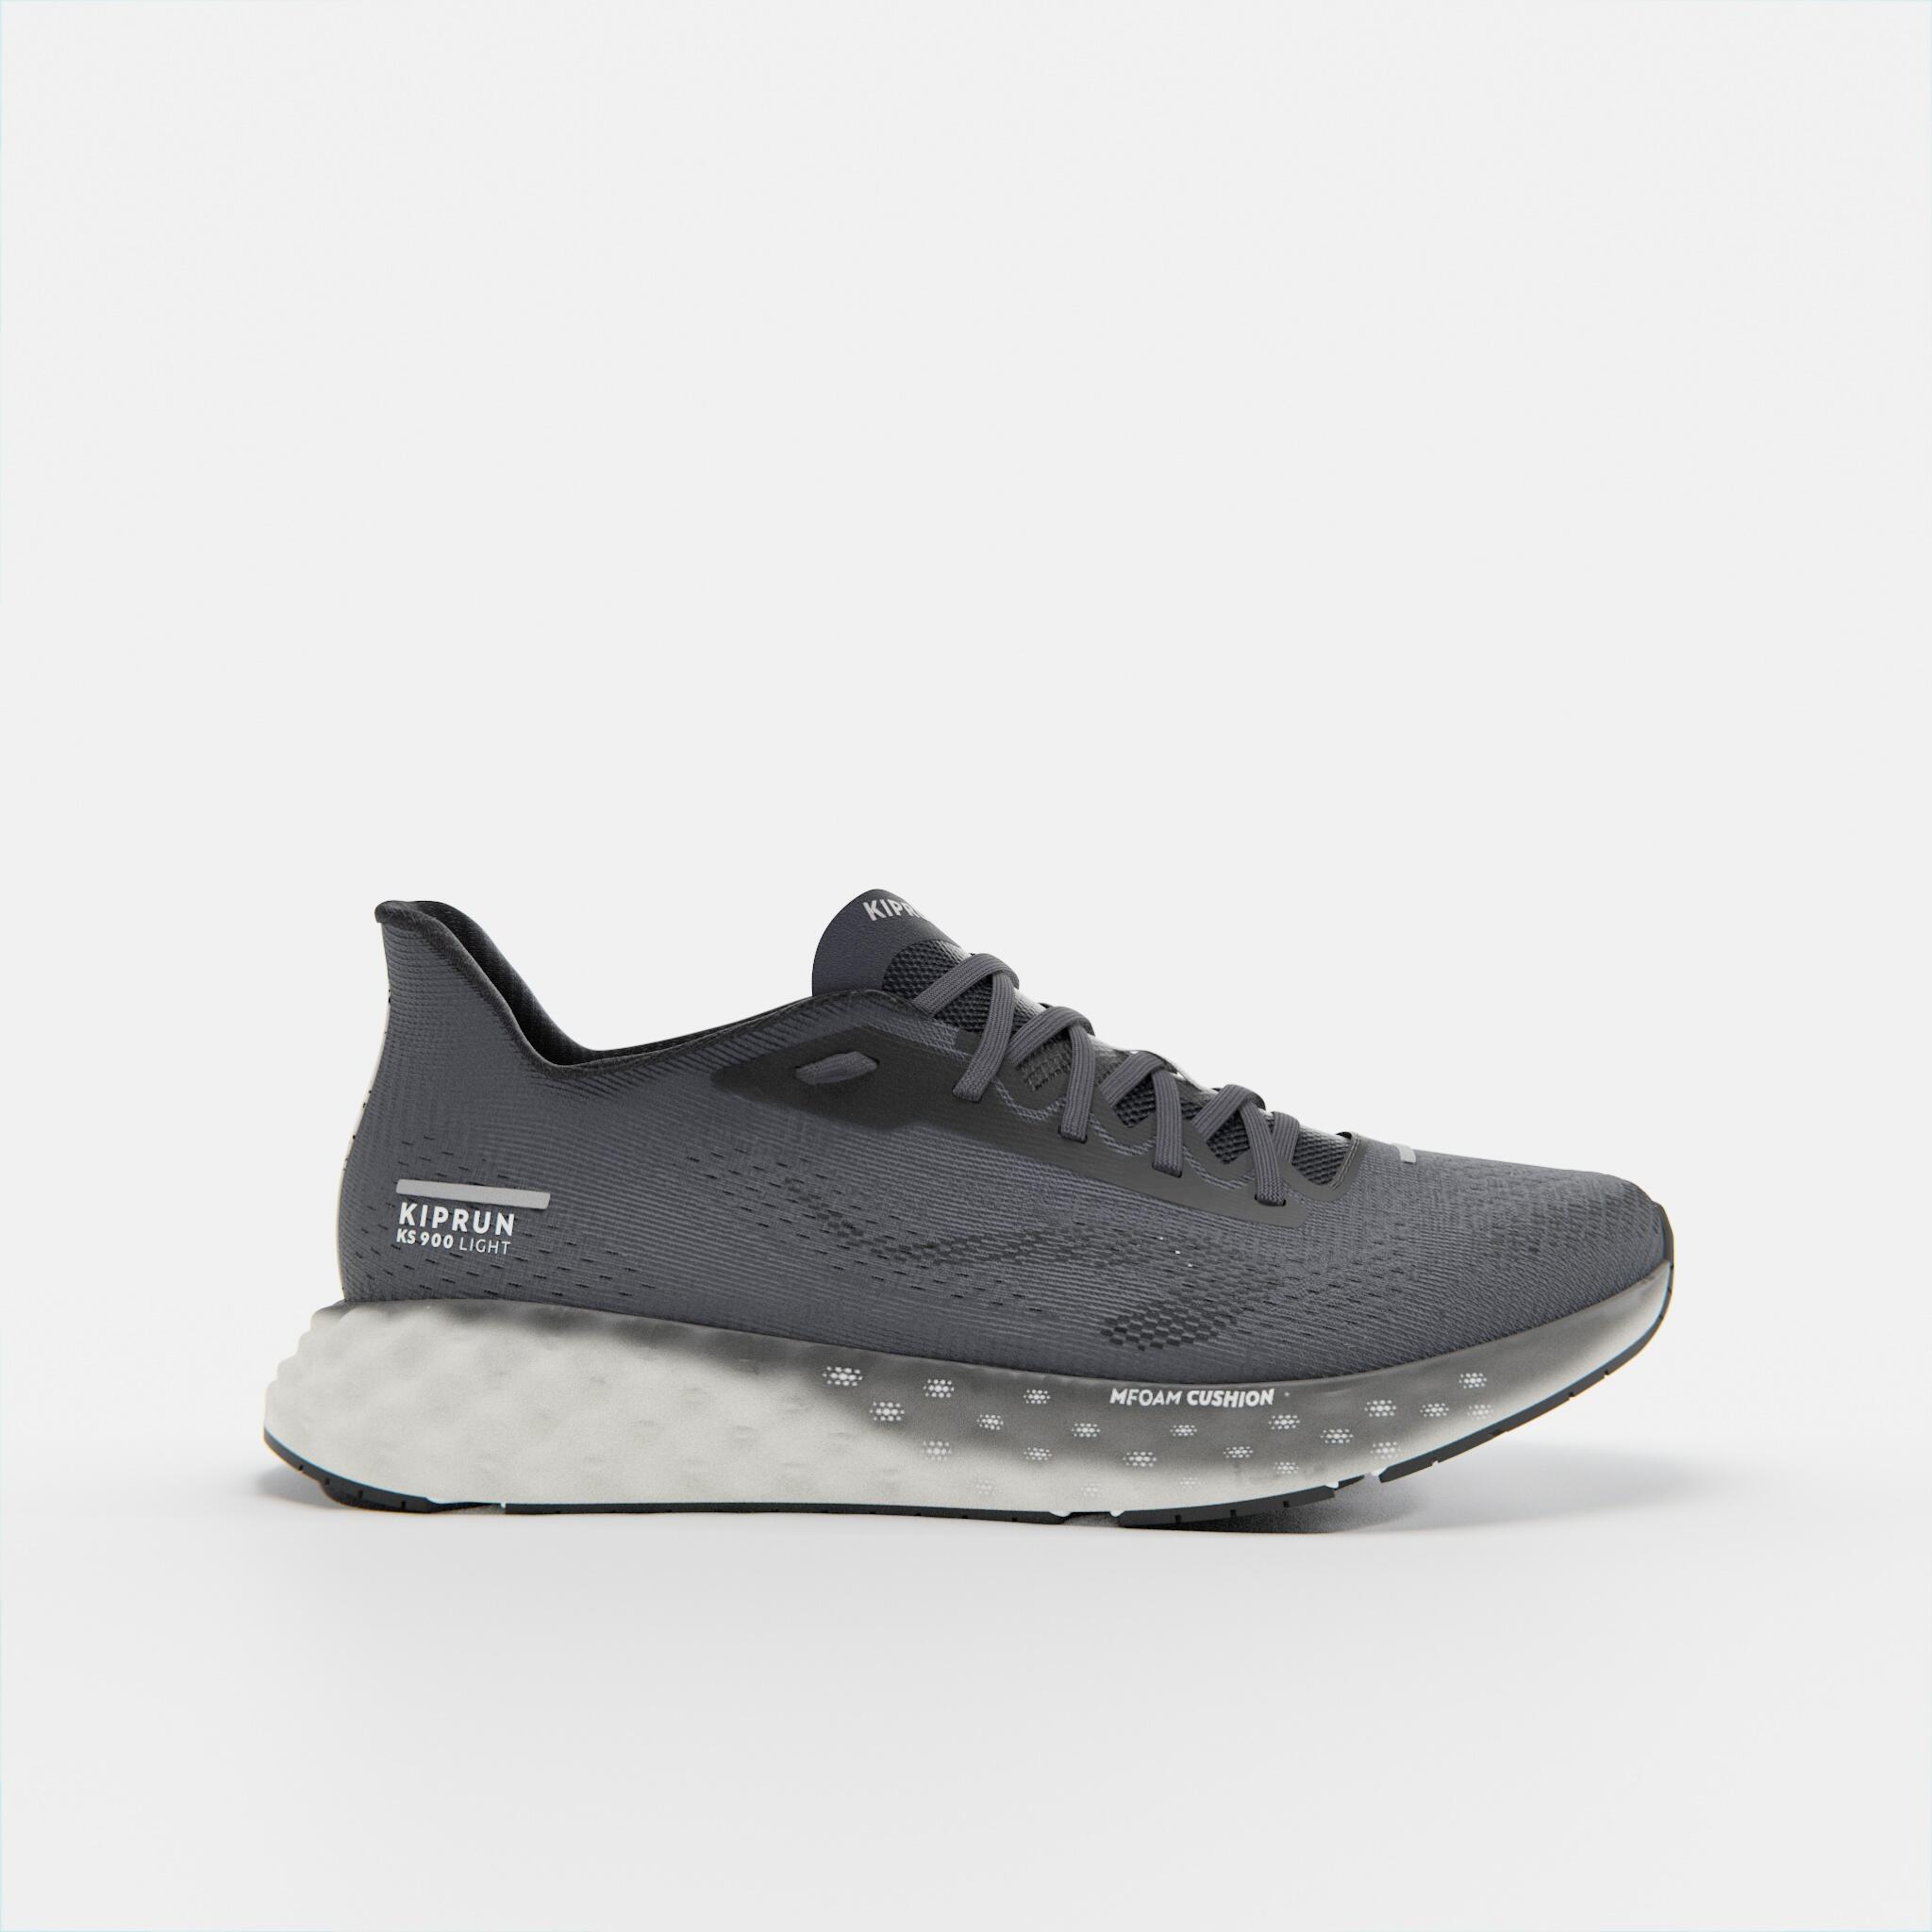 KIPRUN KS900 Light men's running shoes - dark grey 13/13